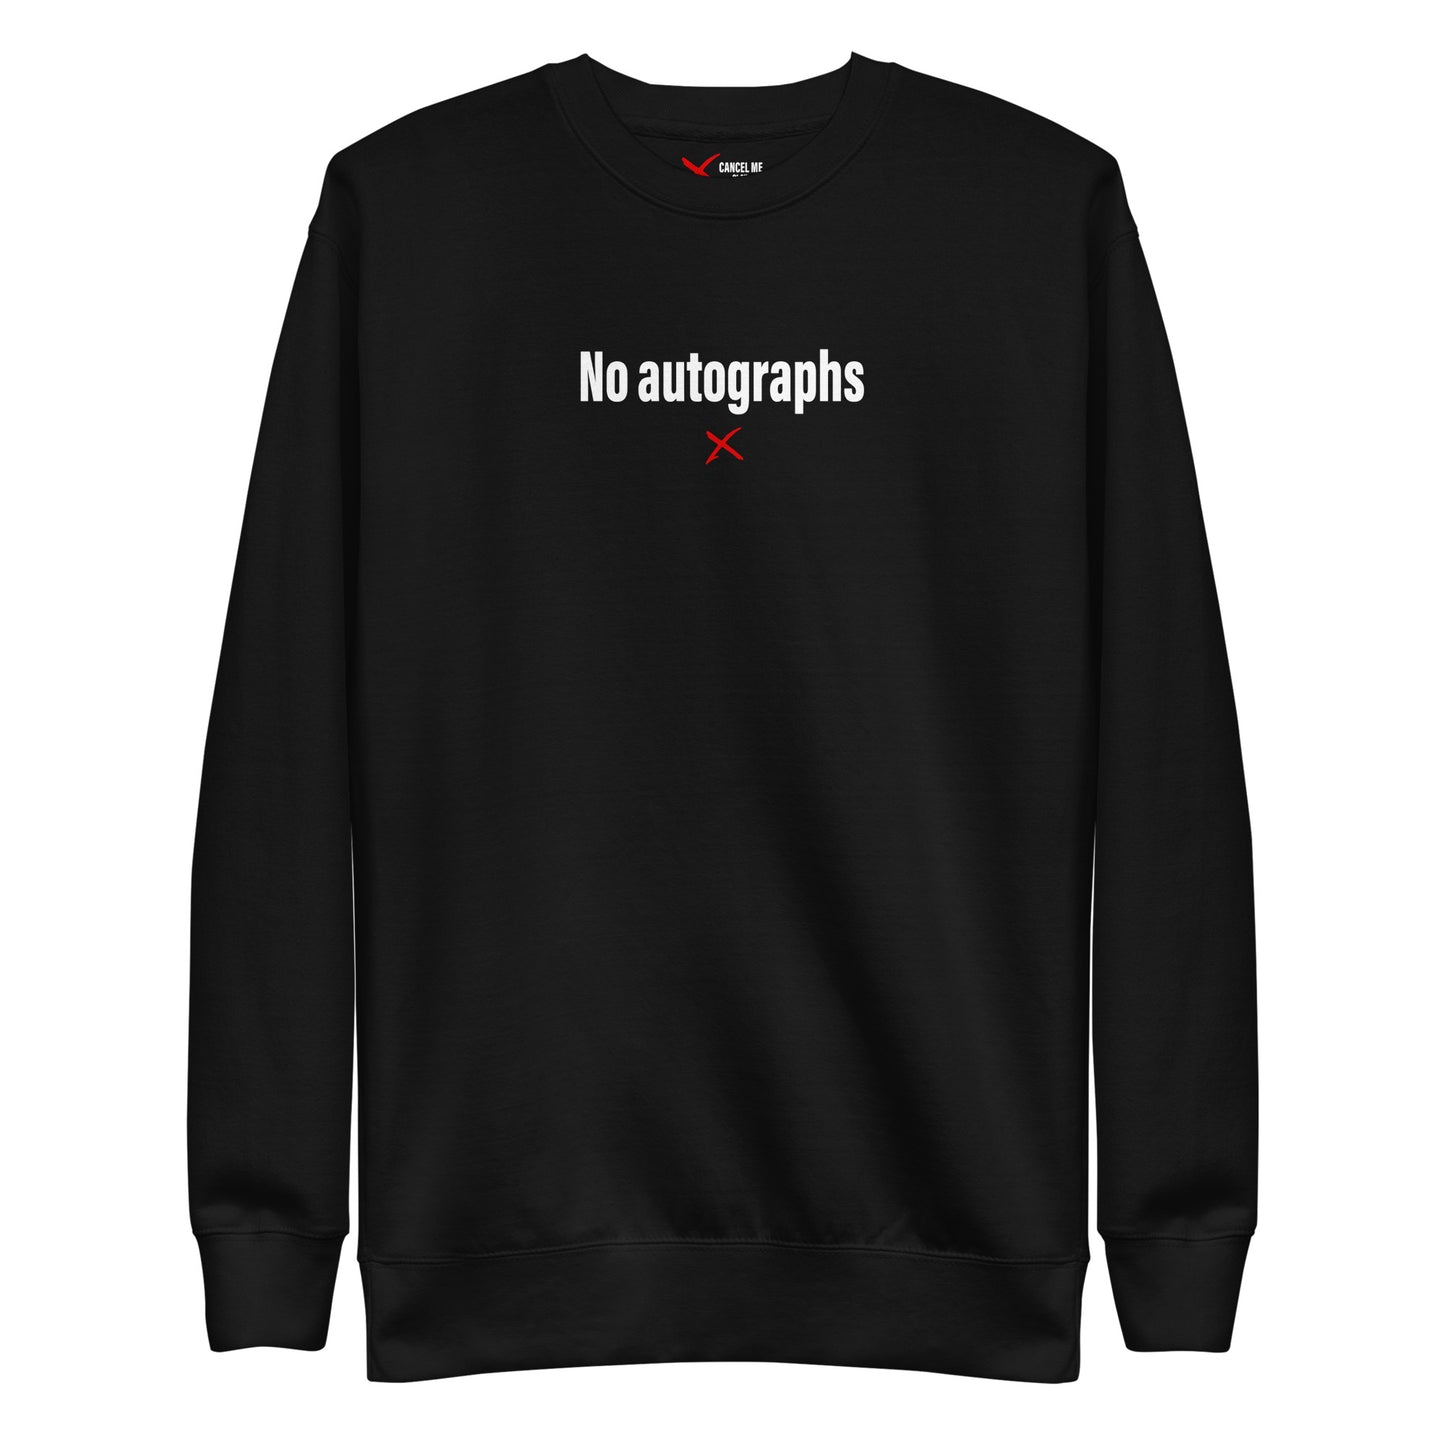 No autographs - Sweatshirt